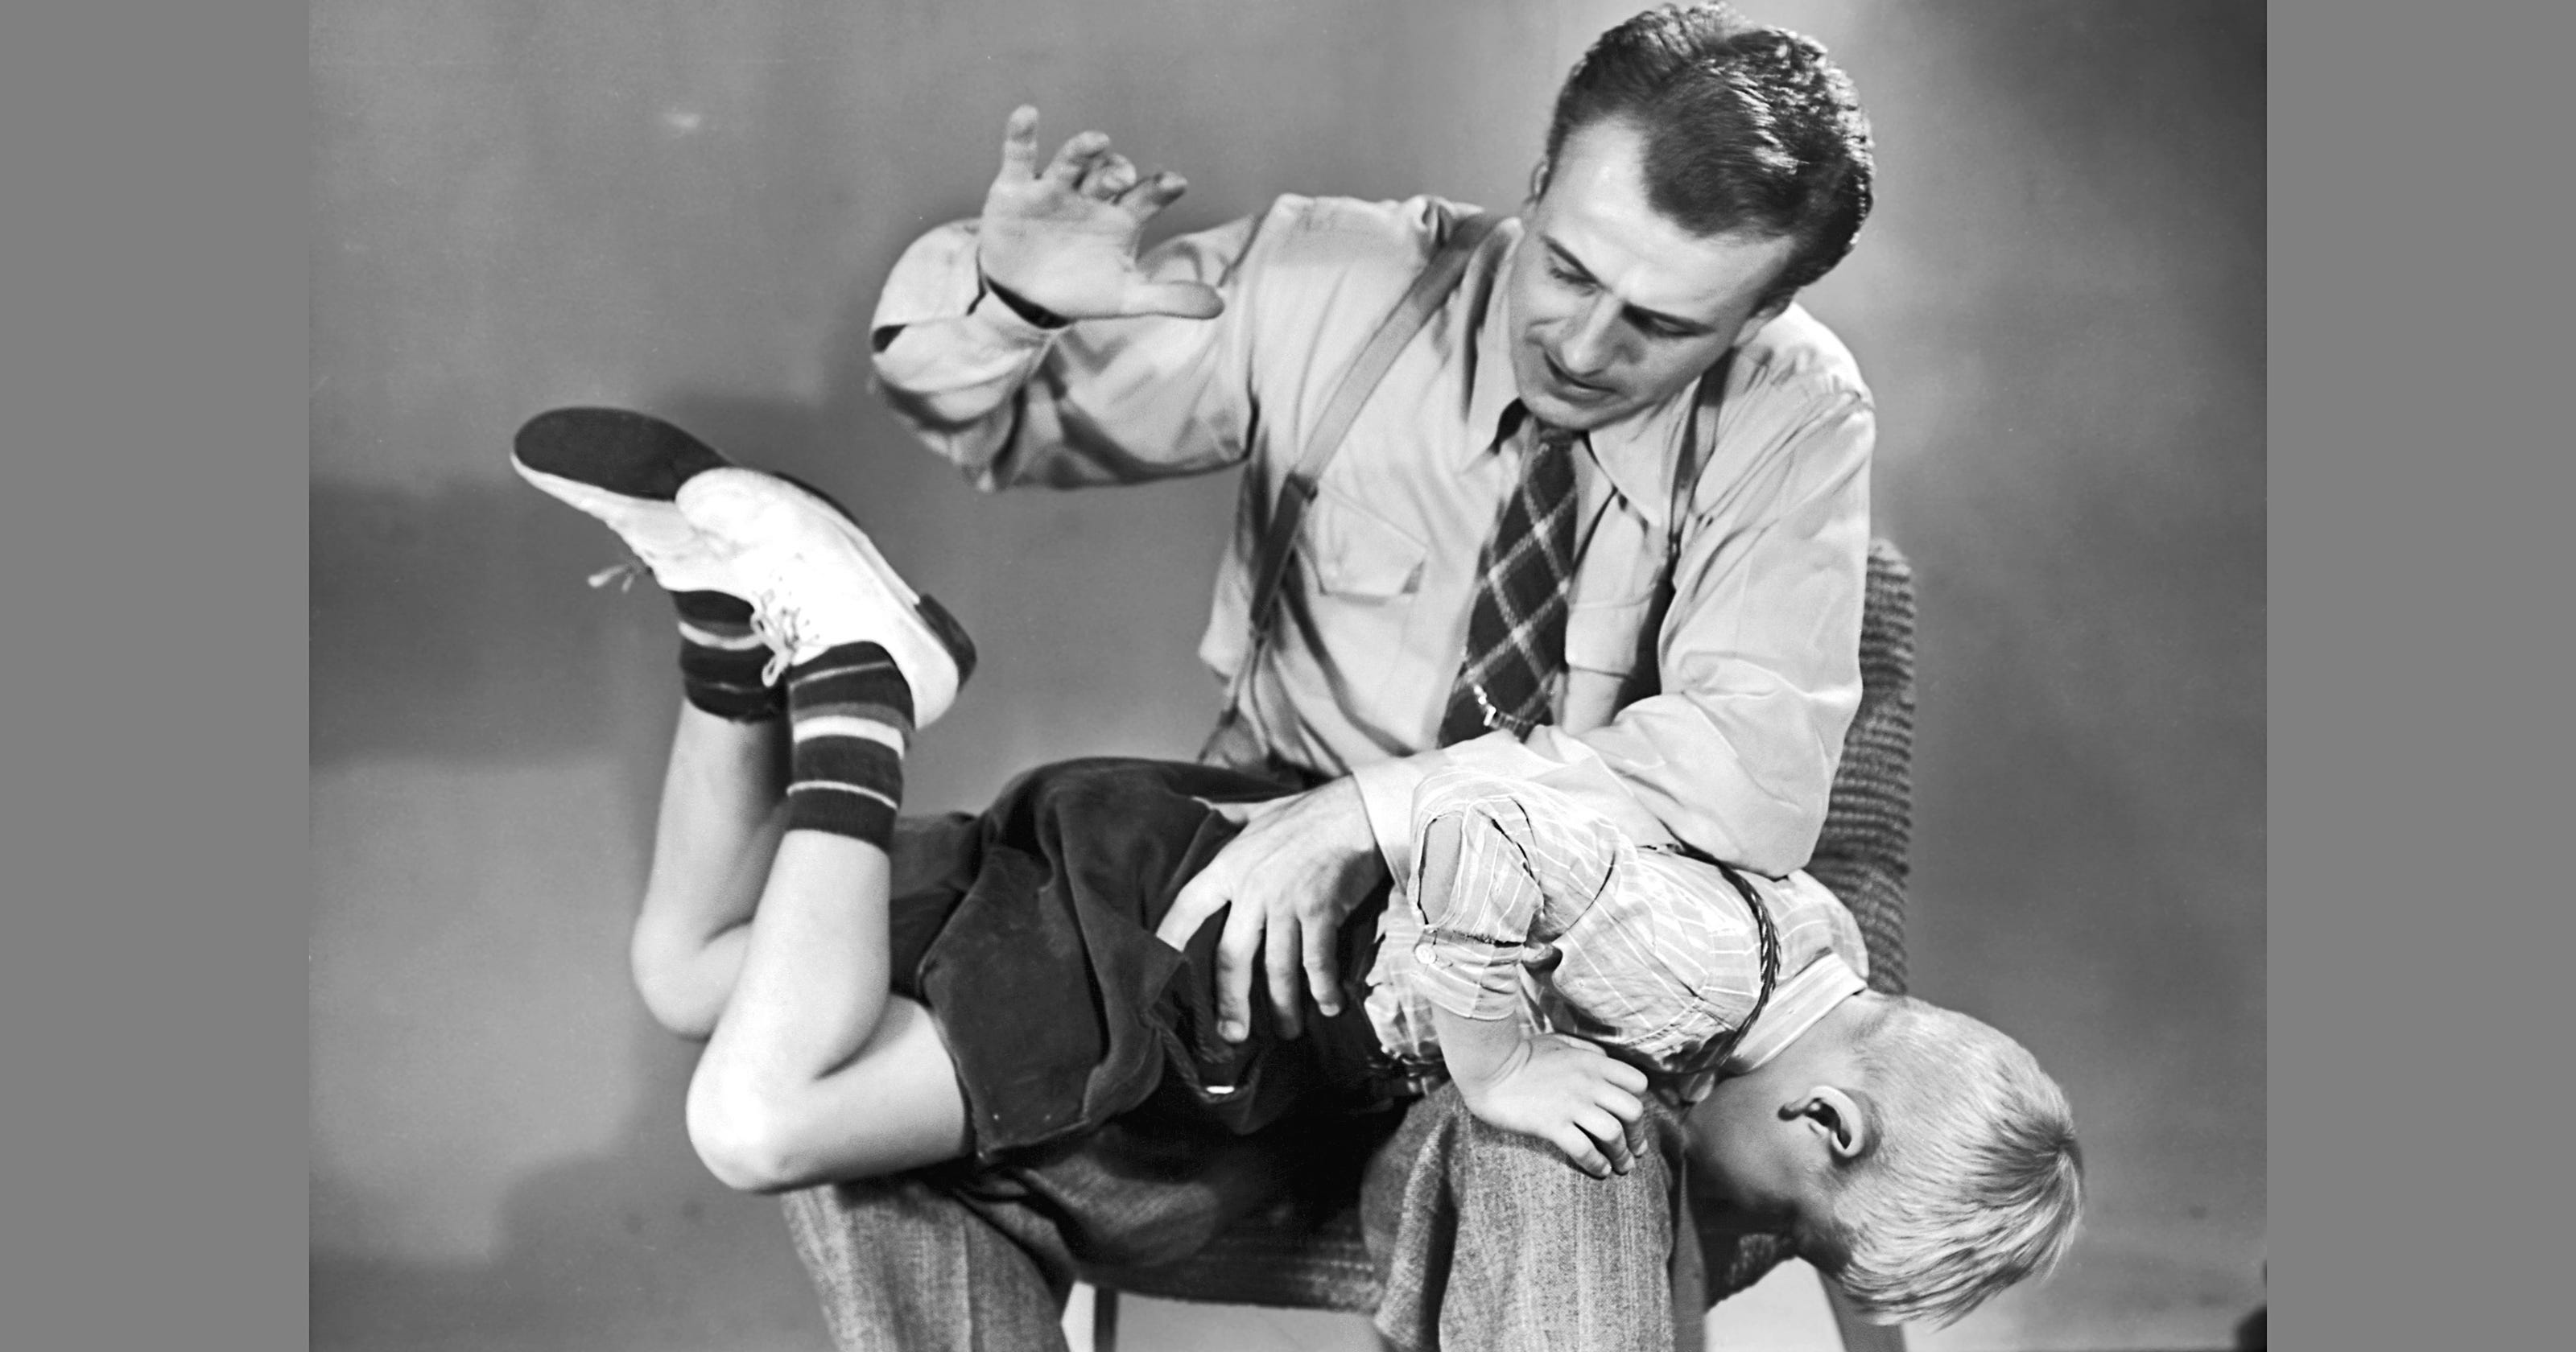 1950s Spanking Videos - Weird History: Judge sentences boys to public spanking